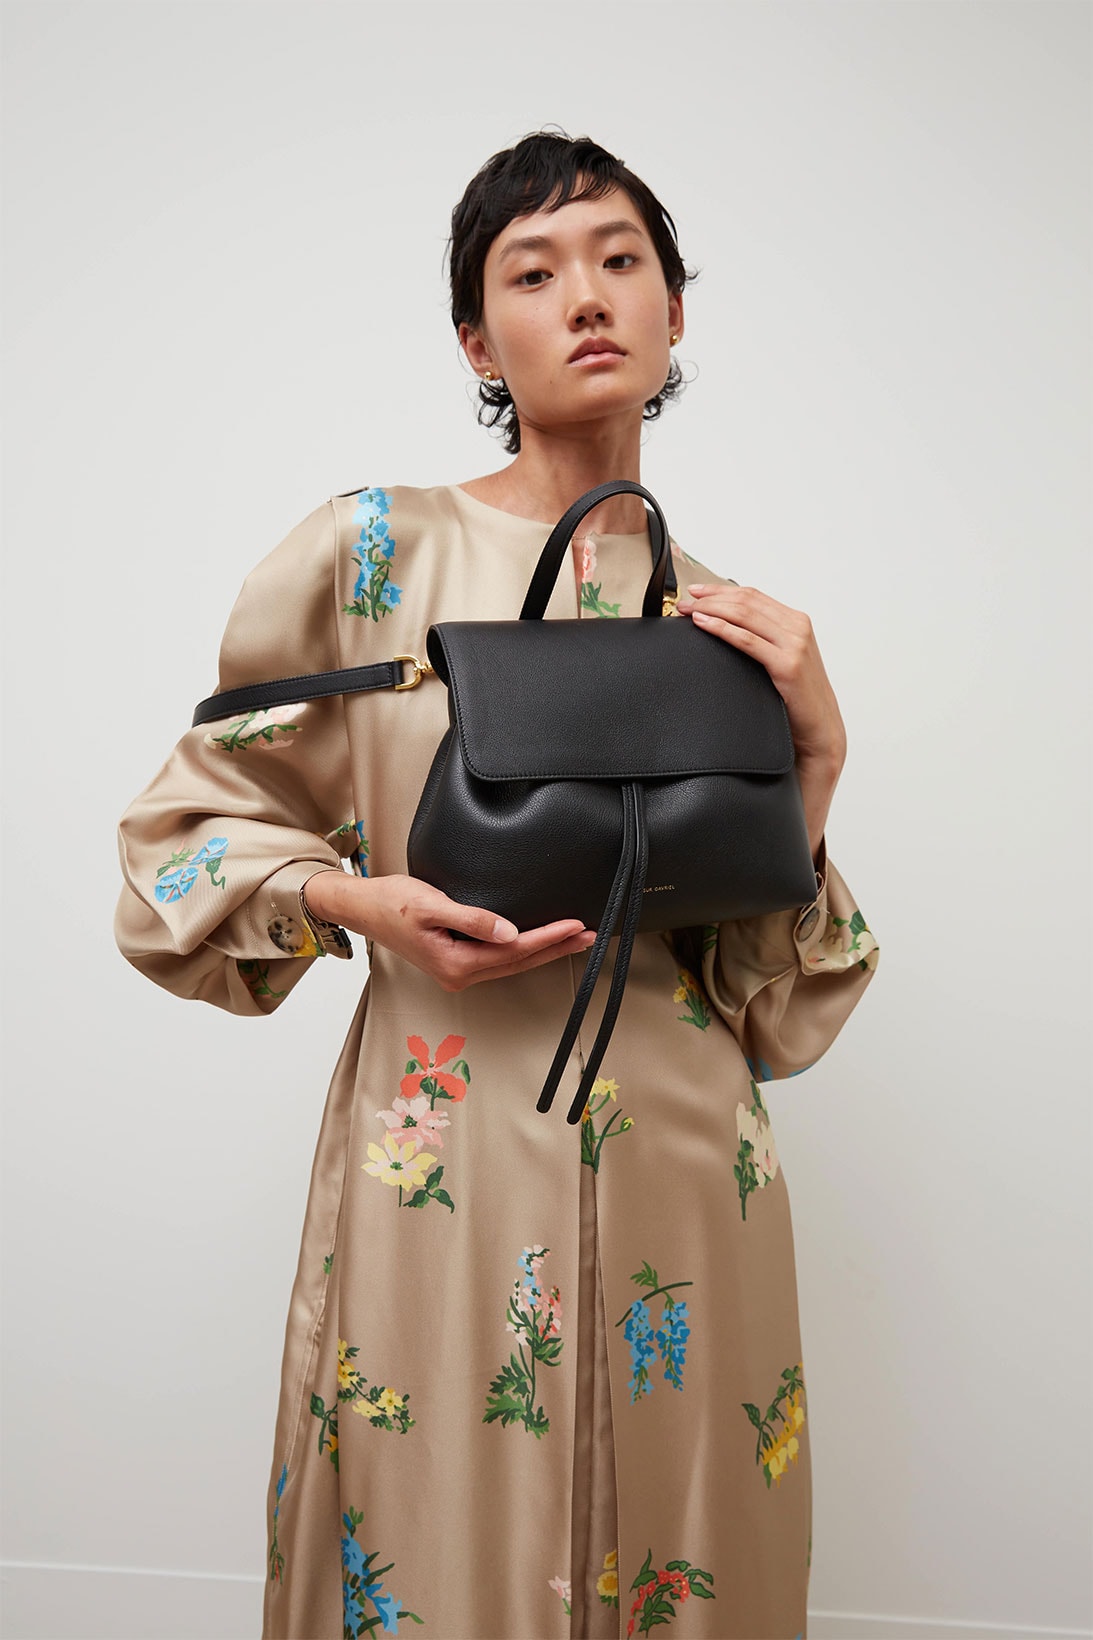 mansur gavriel soft lady handbag calfskin leather black pattern print dress model shot